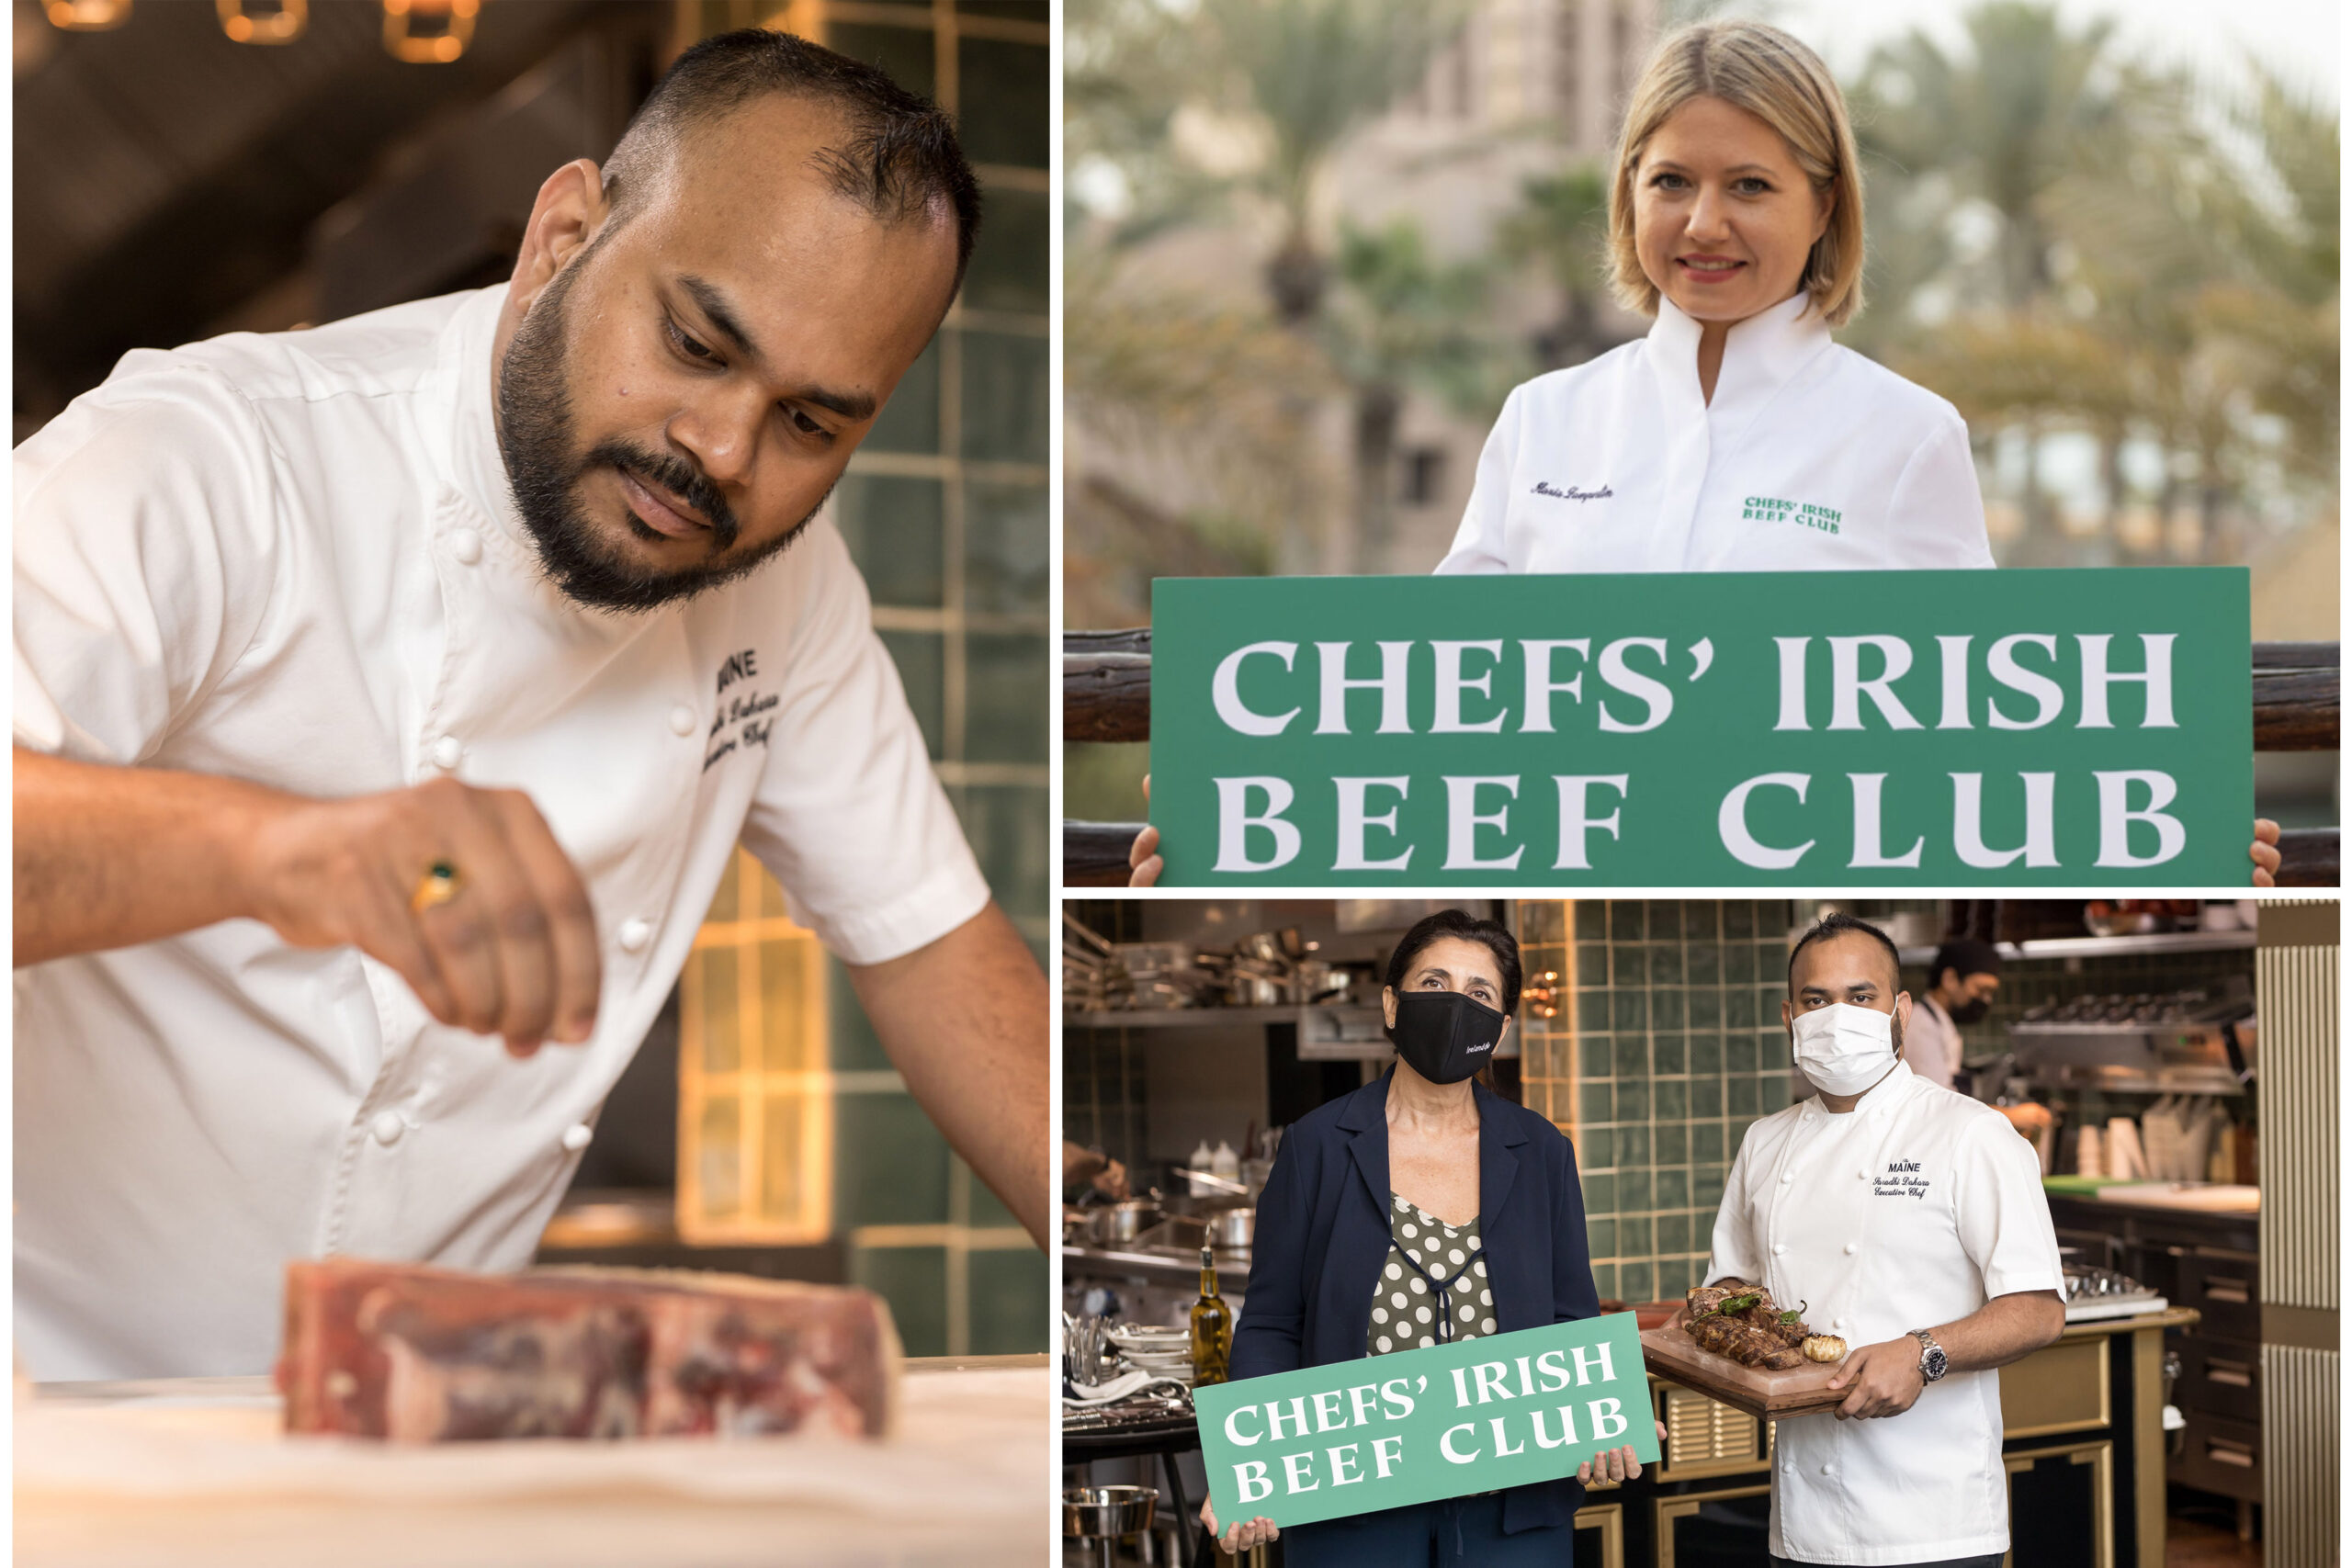 Exclusive Chefs’ Irish Beef Club